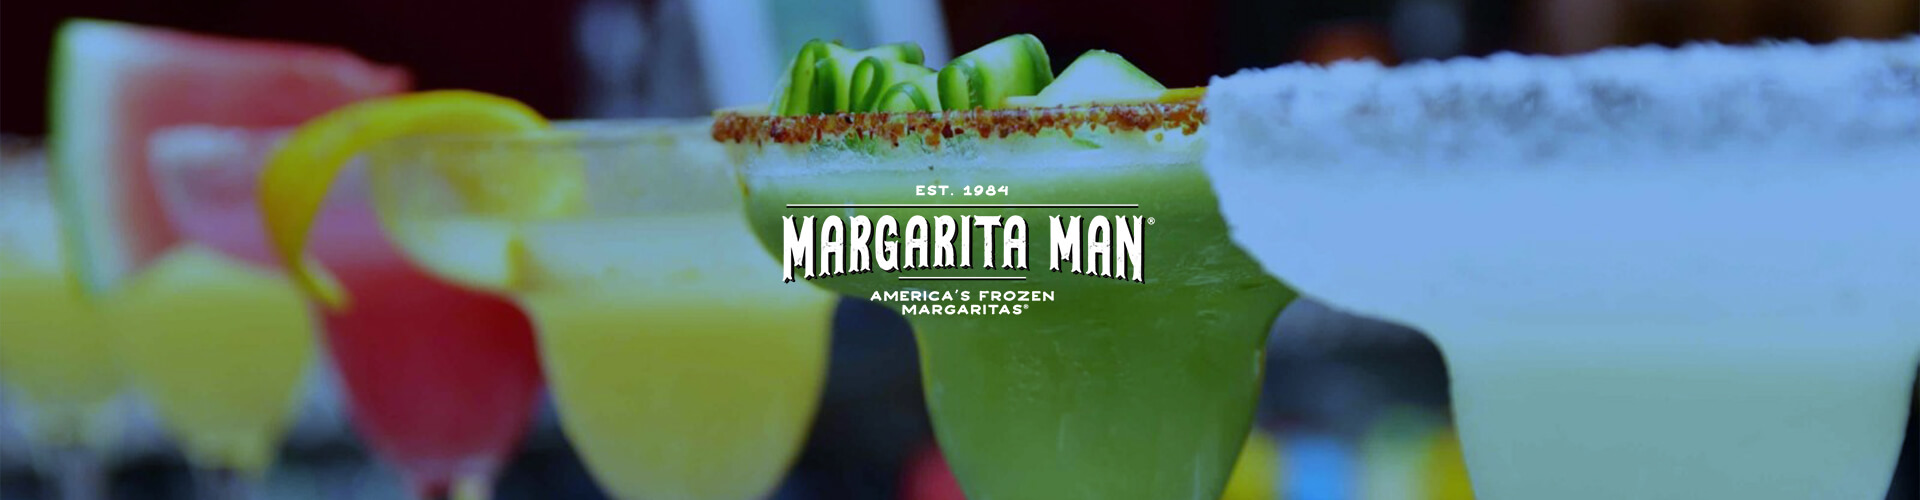 Case Study - Margarita Man